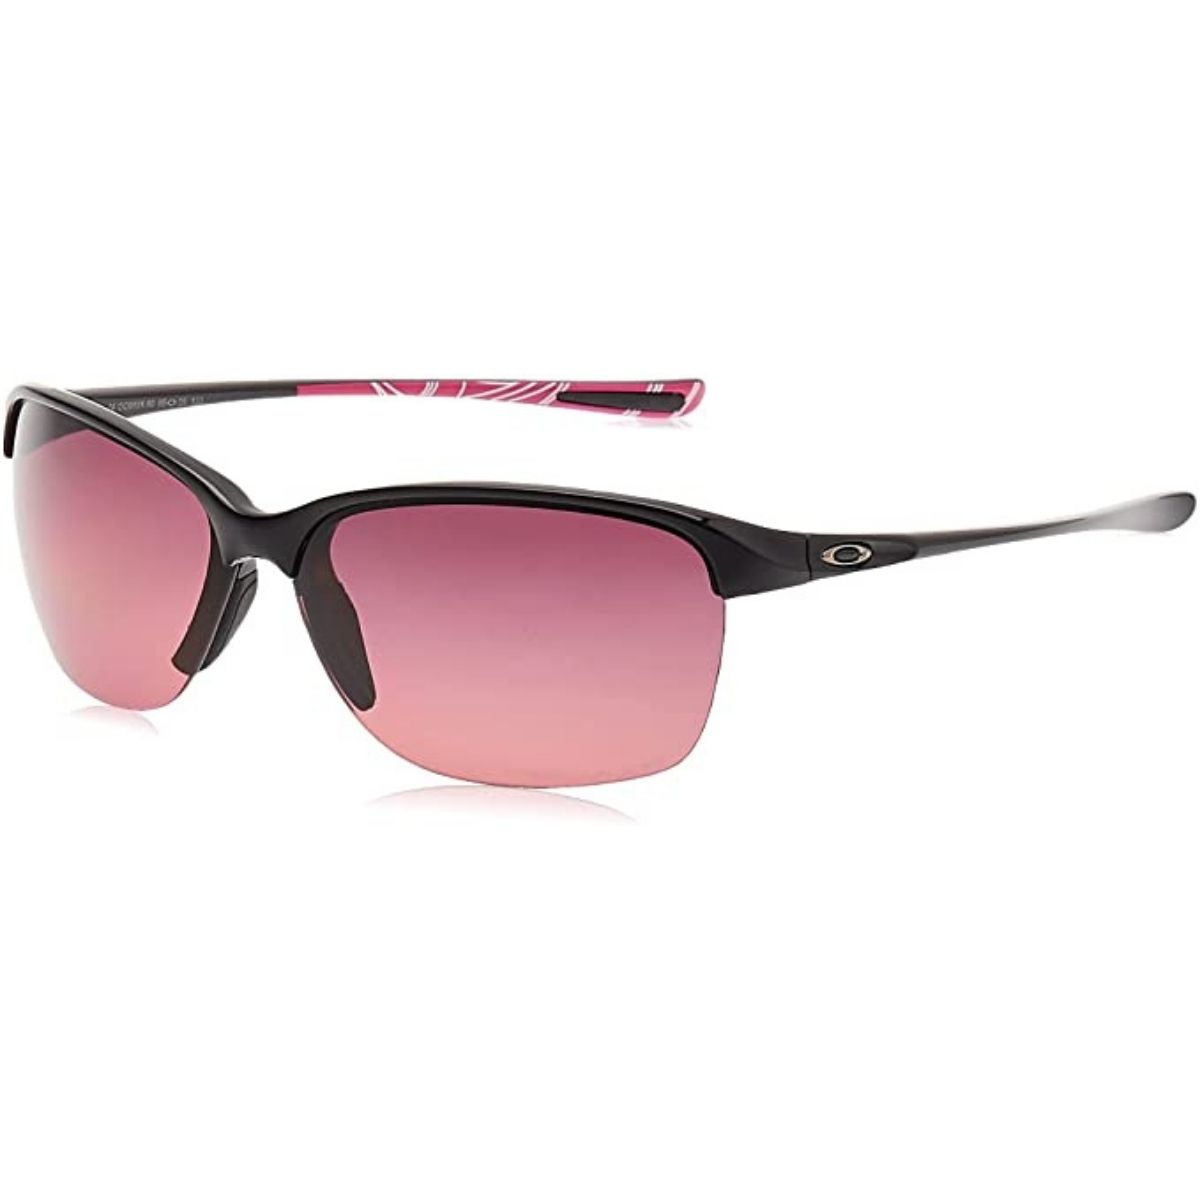 The Best Sunglasses for Tennis Options: Oakley Women’s Unstoppable Glasses